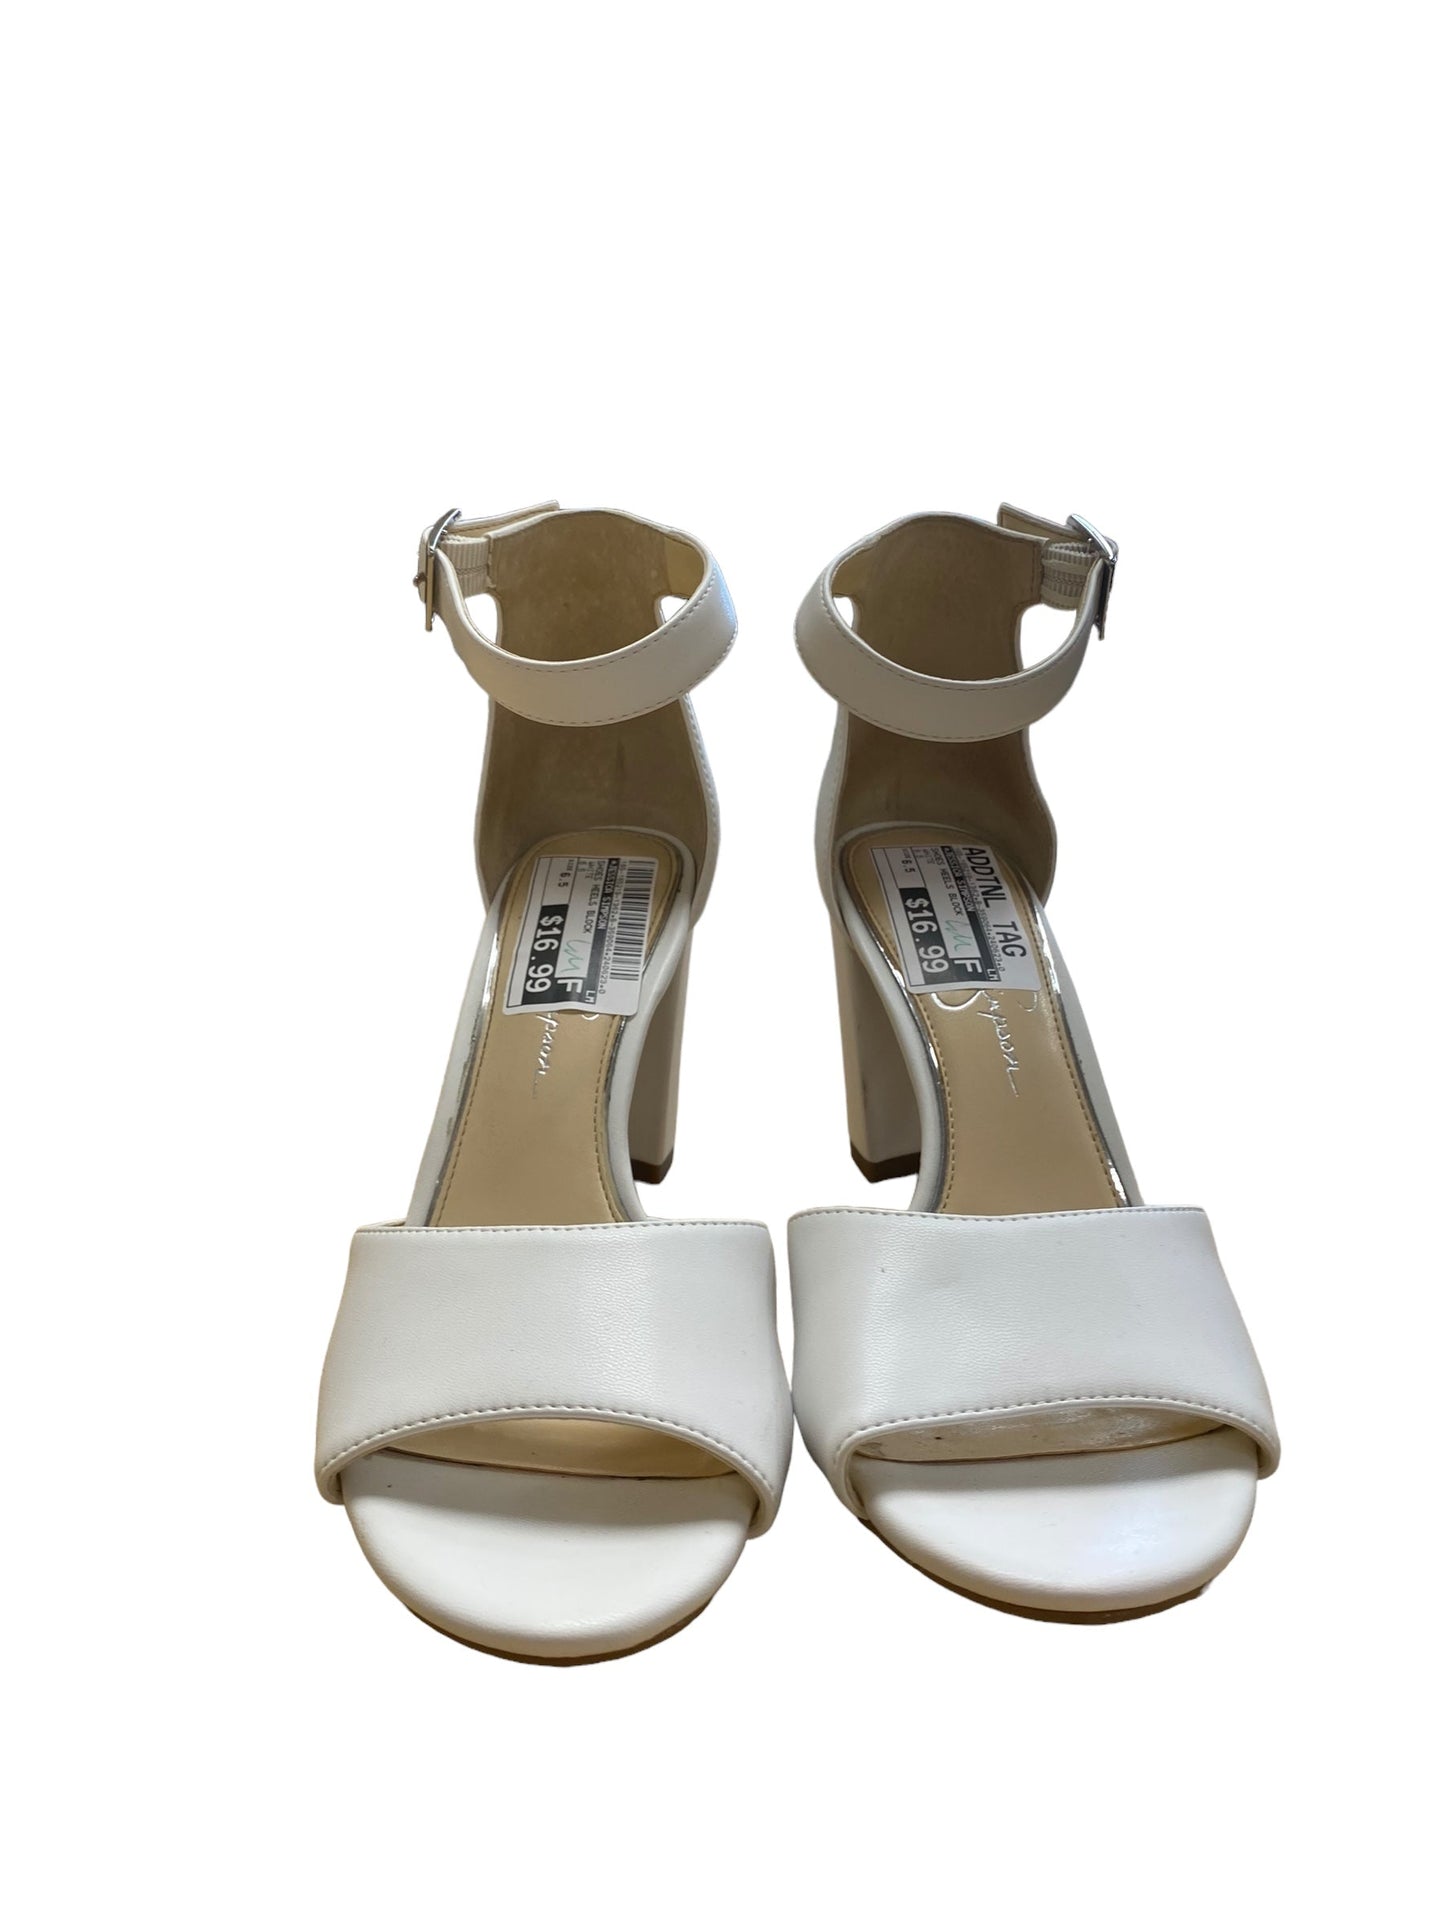 White Shoes Heels Block Jessica Simpson, Size 6.5